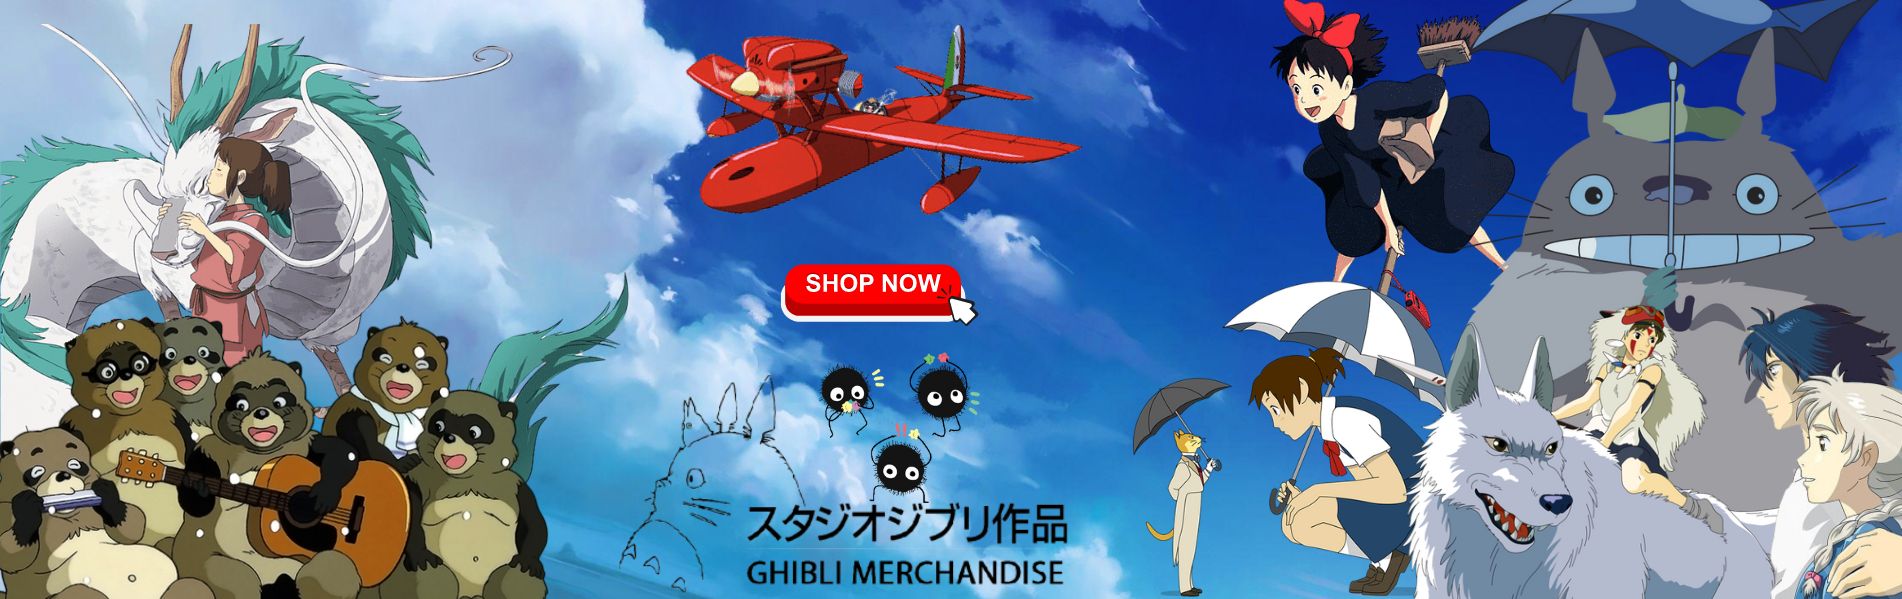 Ghibli Merchandise Shop Banner